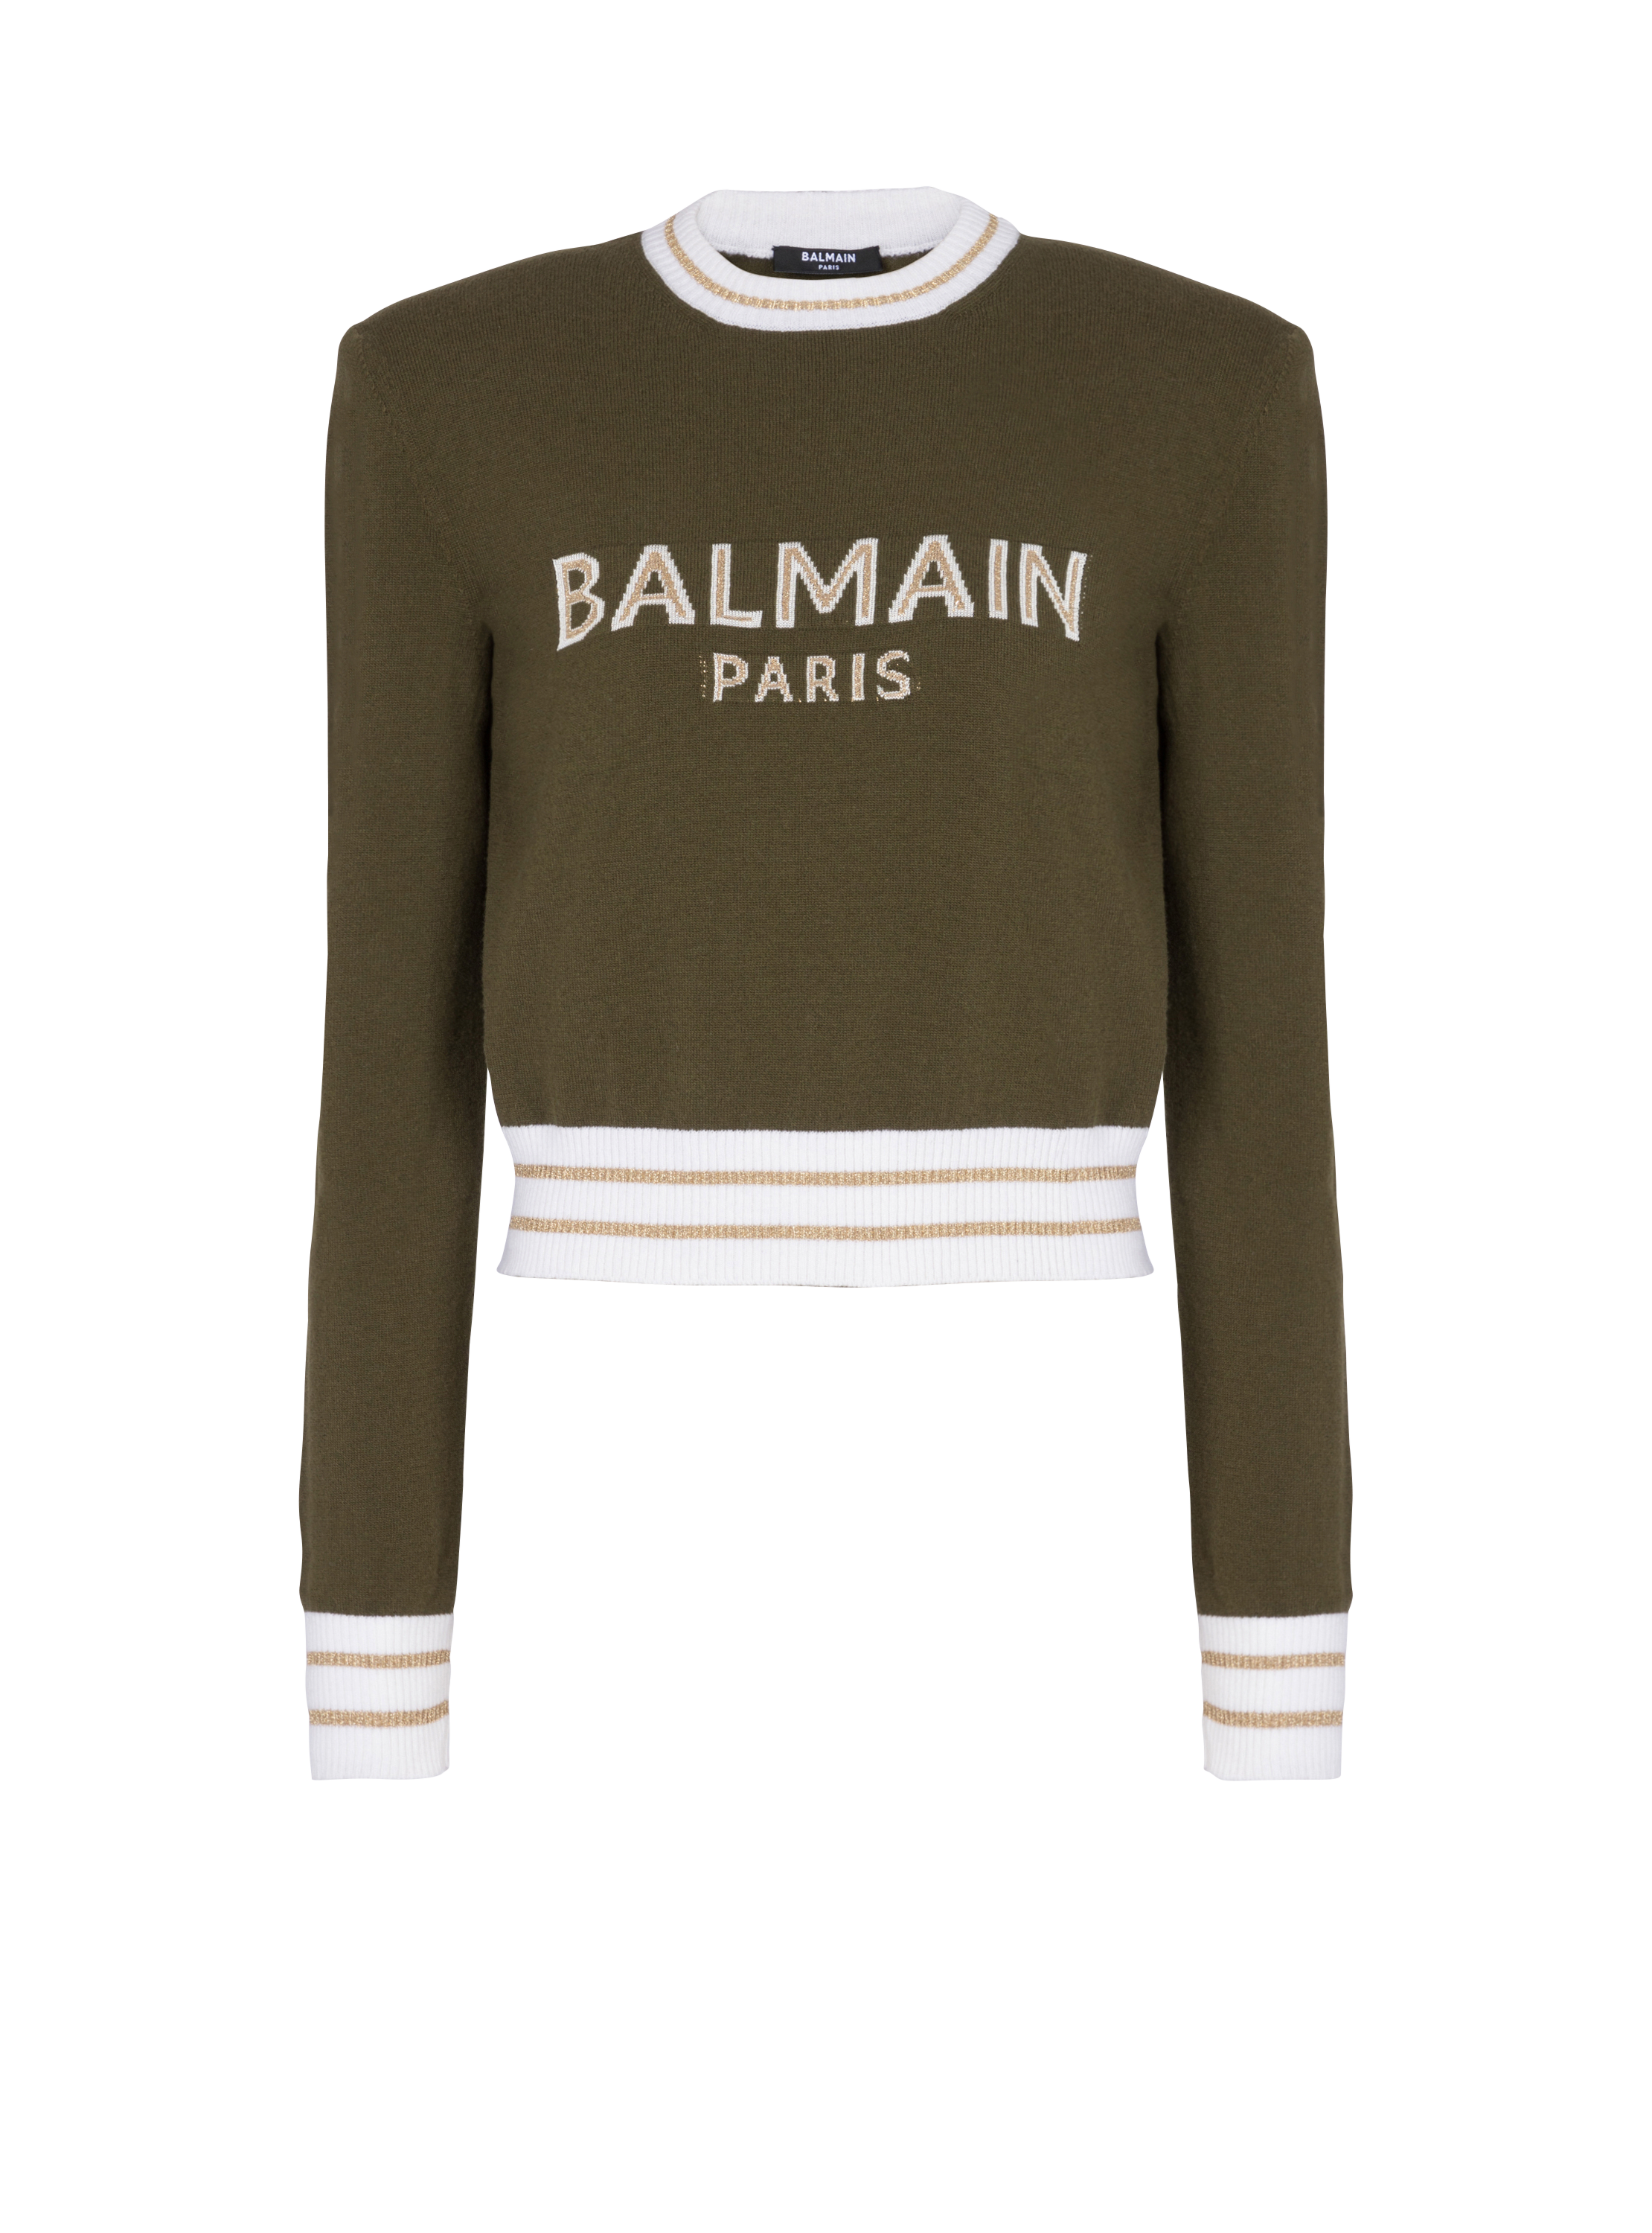 Jersey corto de lana con logotipo de Balmain, caqui, hi-res